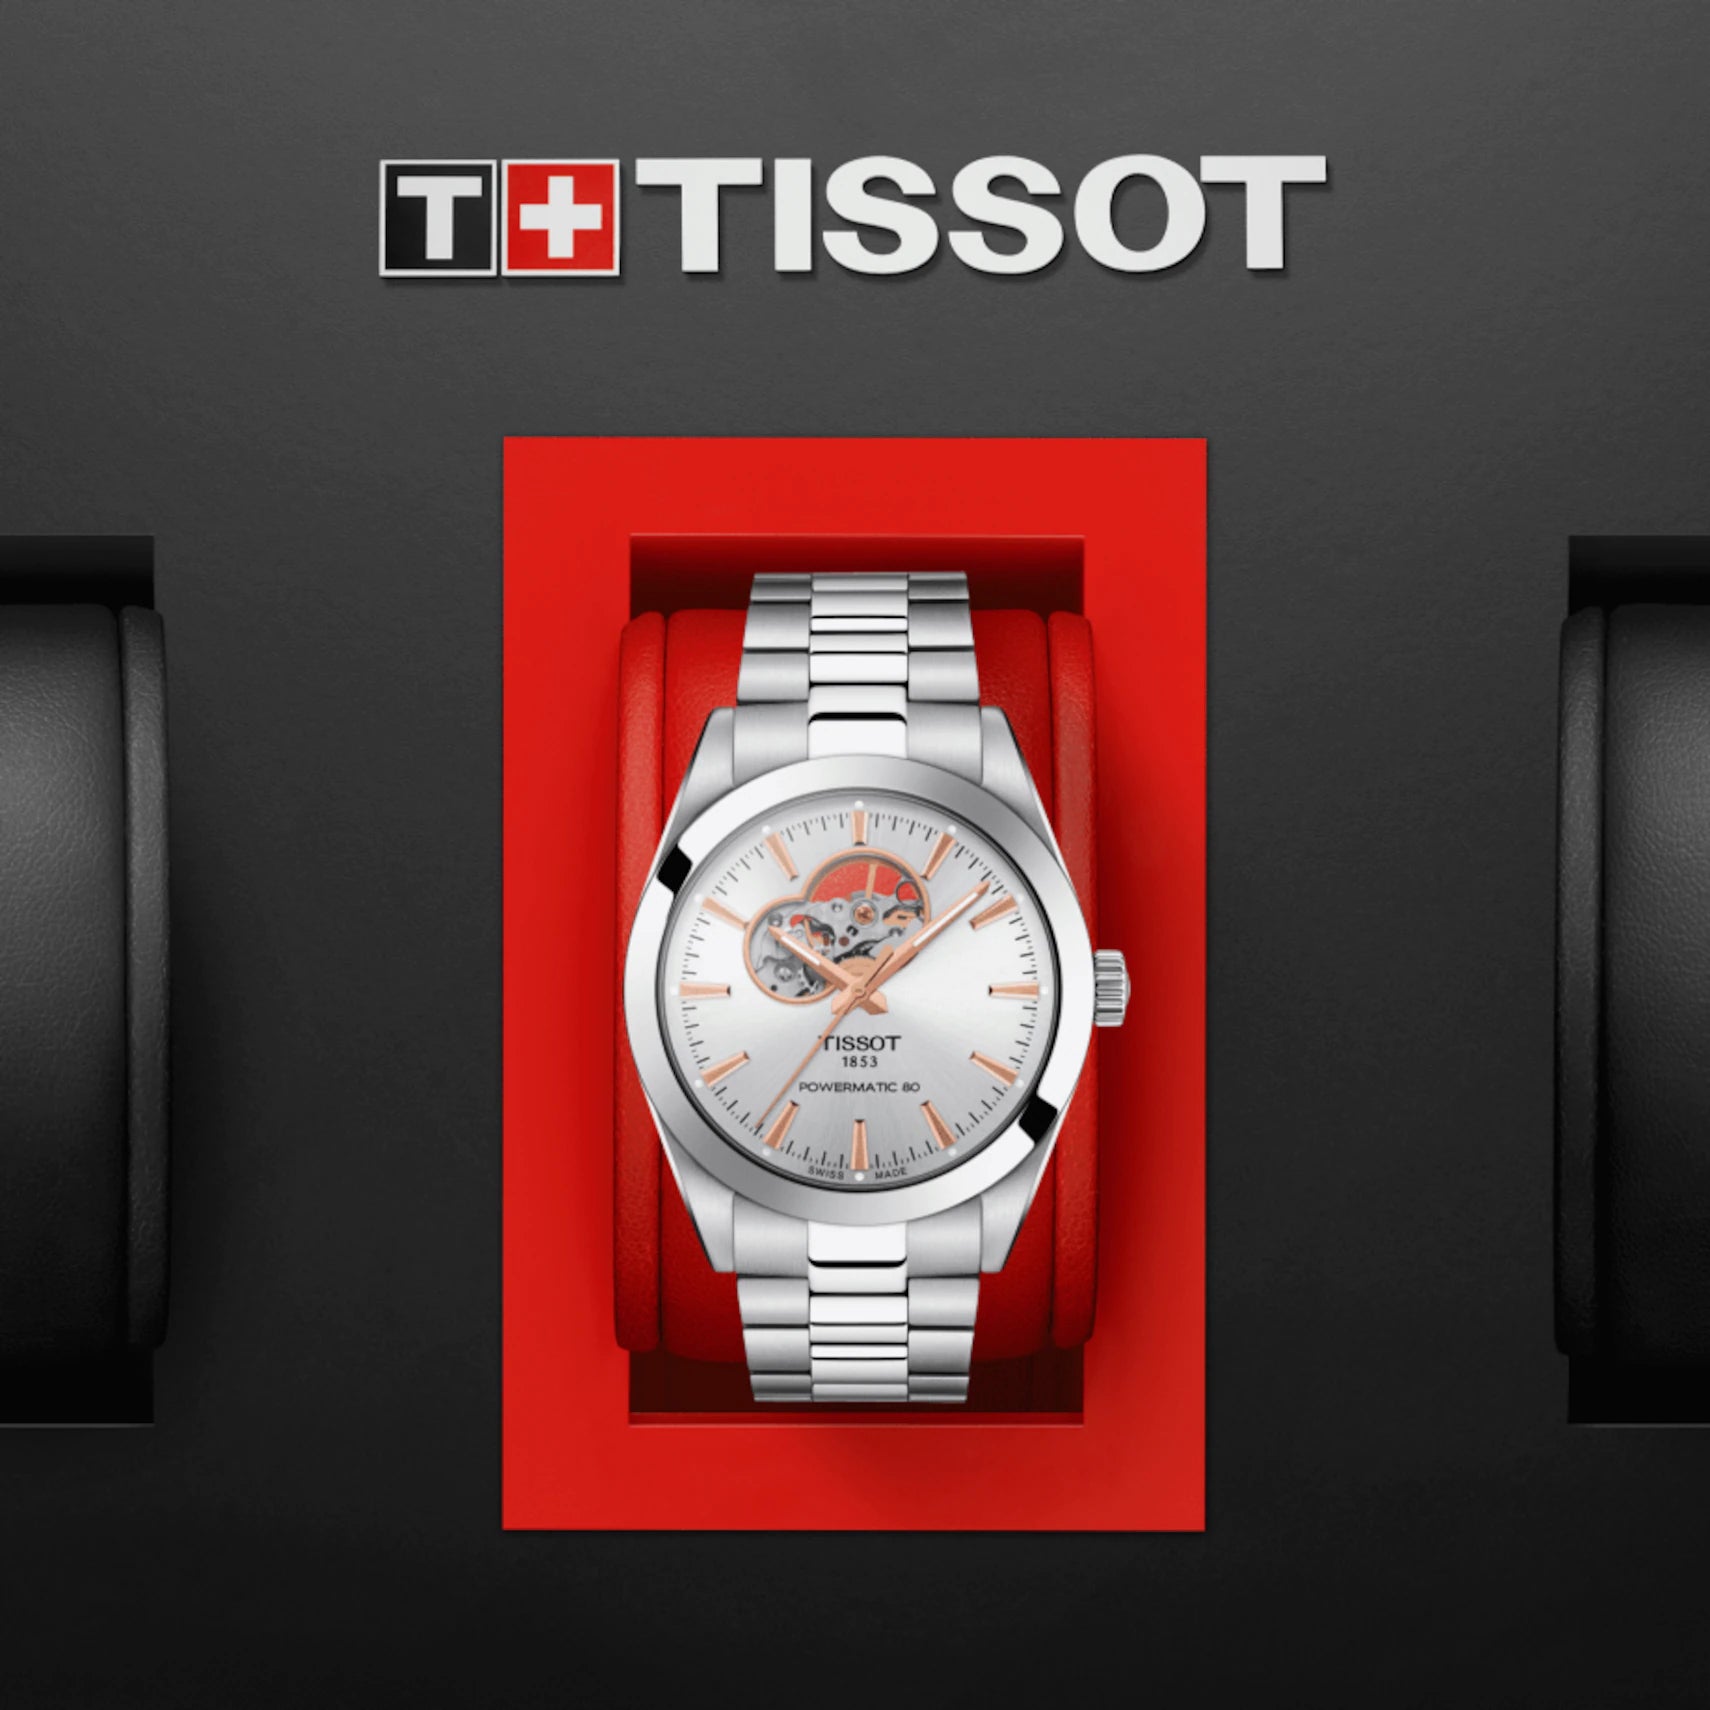 Tissot Gentleman Open Heart Automatic, model #T127.407.11.031.01, at IJL Since 1937